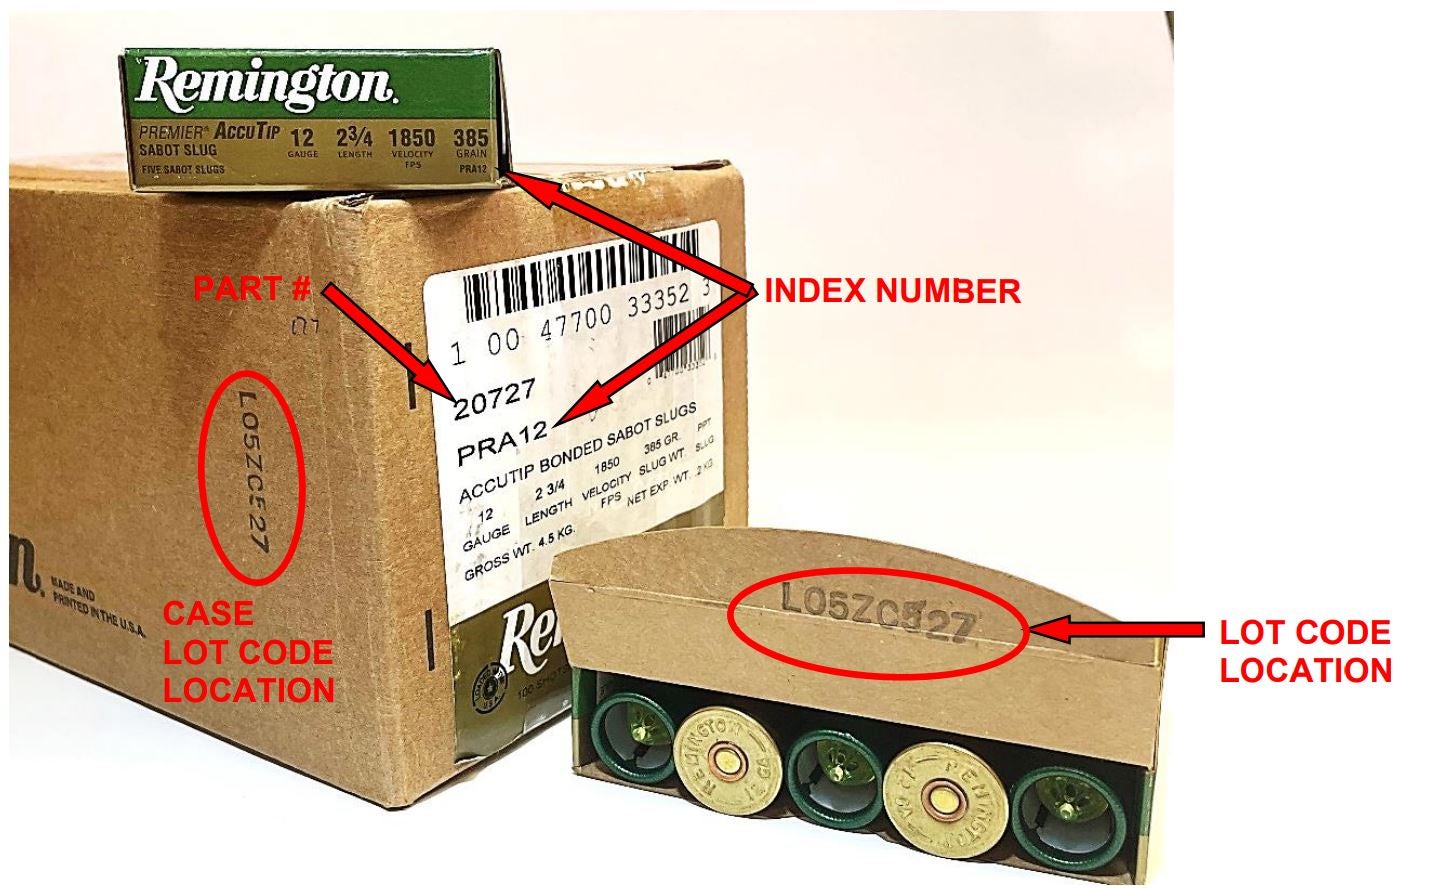 Product Safety Recall: Remington Premier AccuTip Sabot Slugs